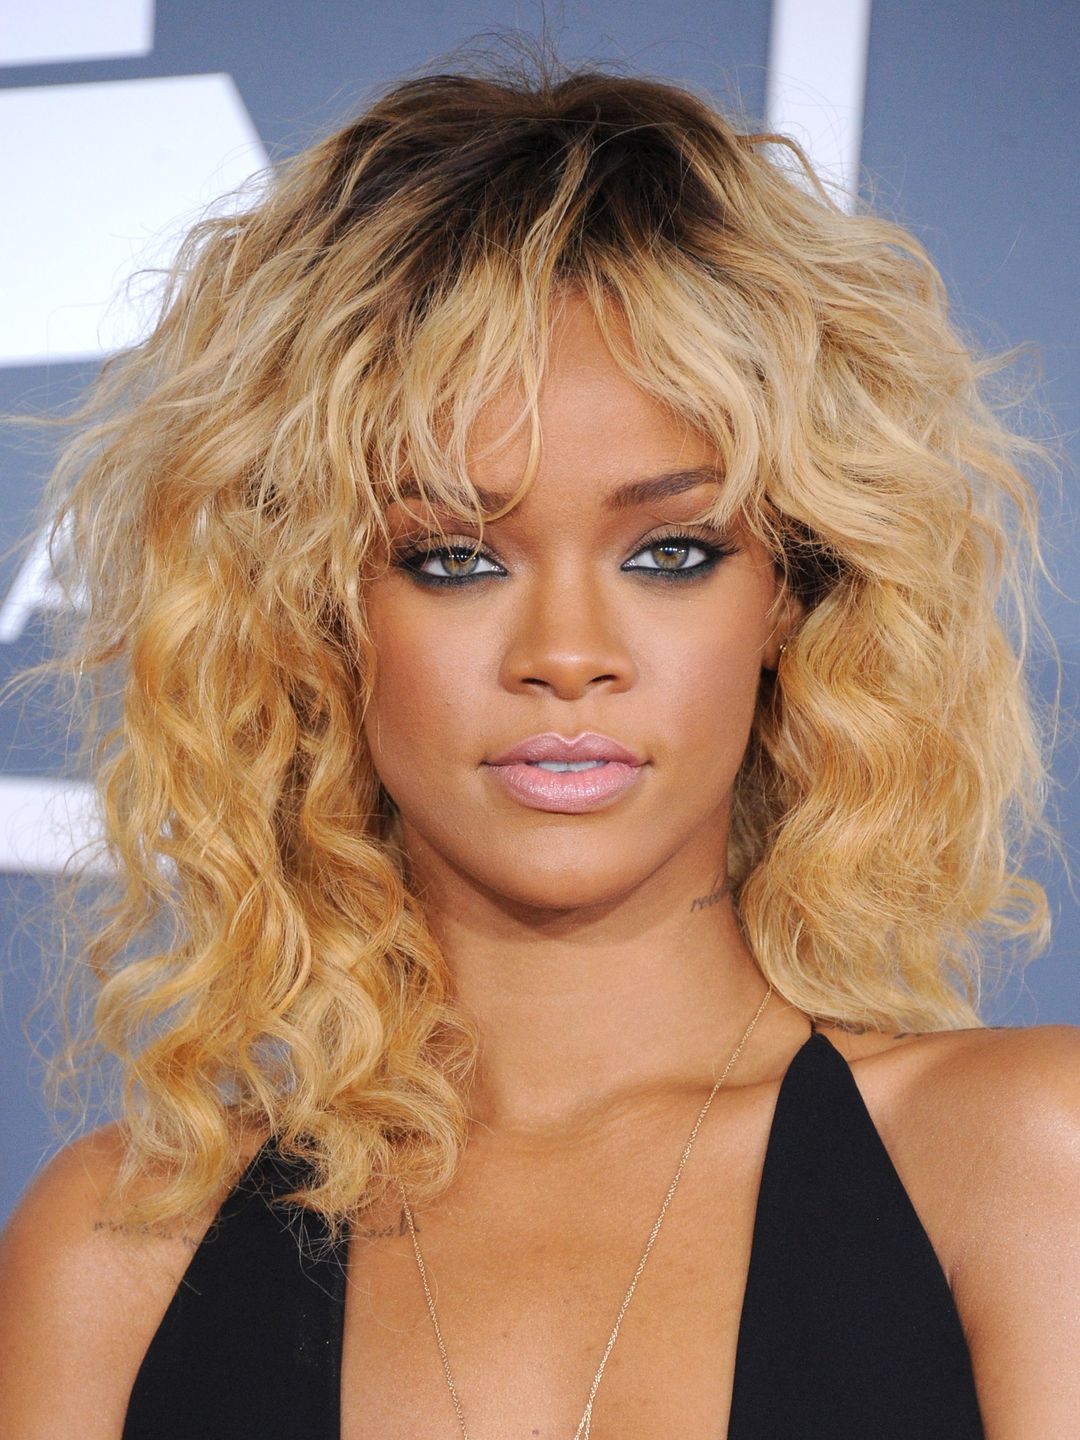 Rihanna also went blonde back in 2012